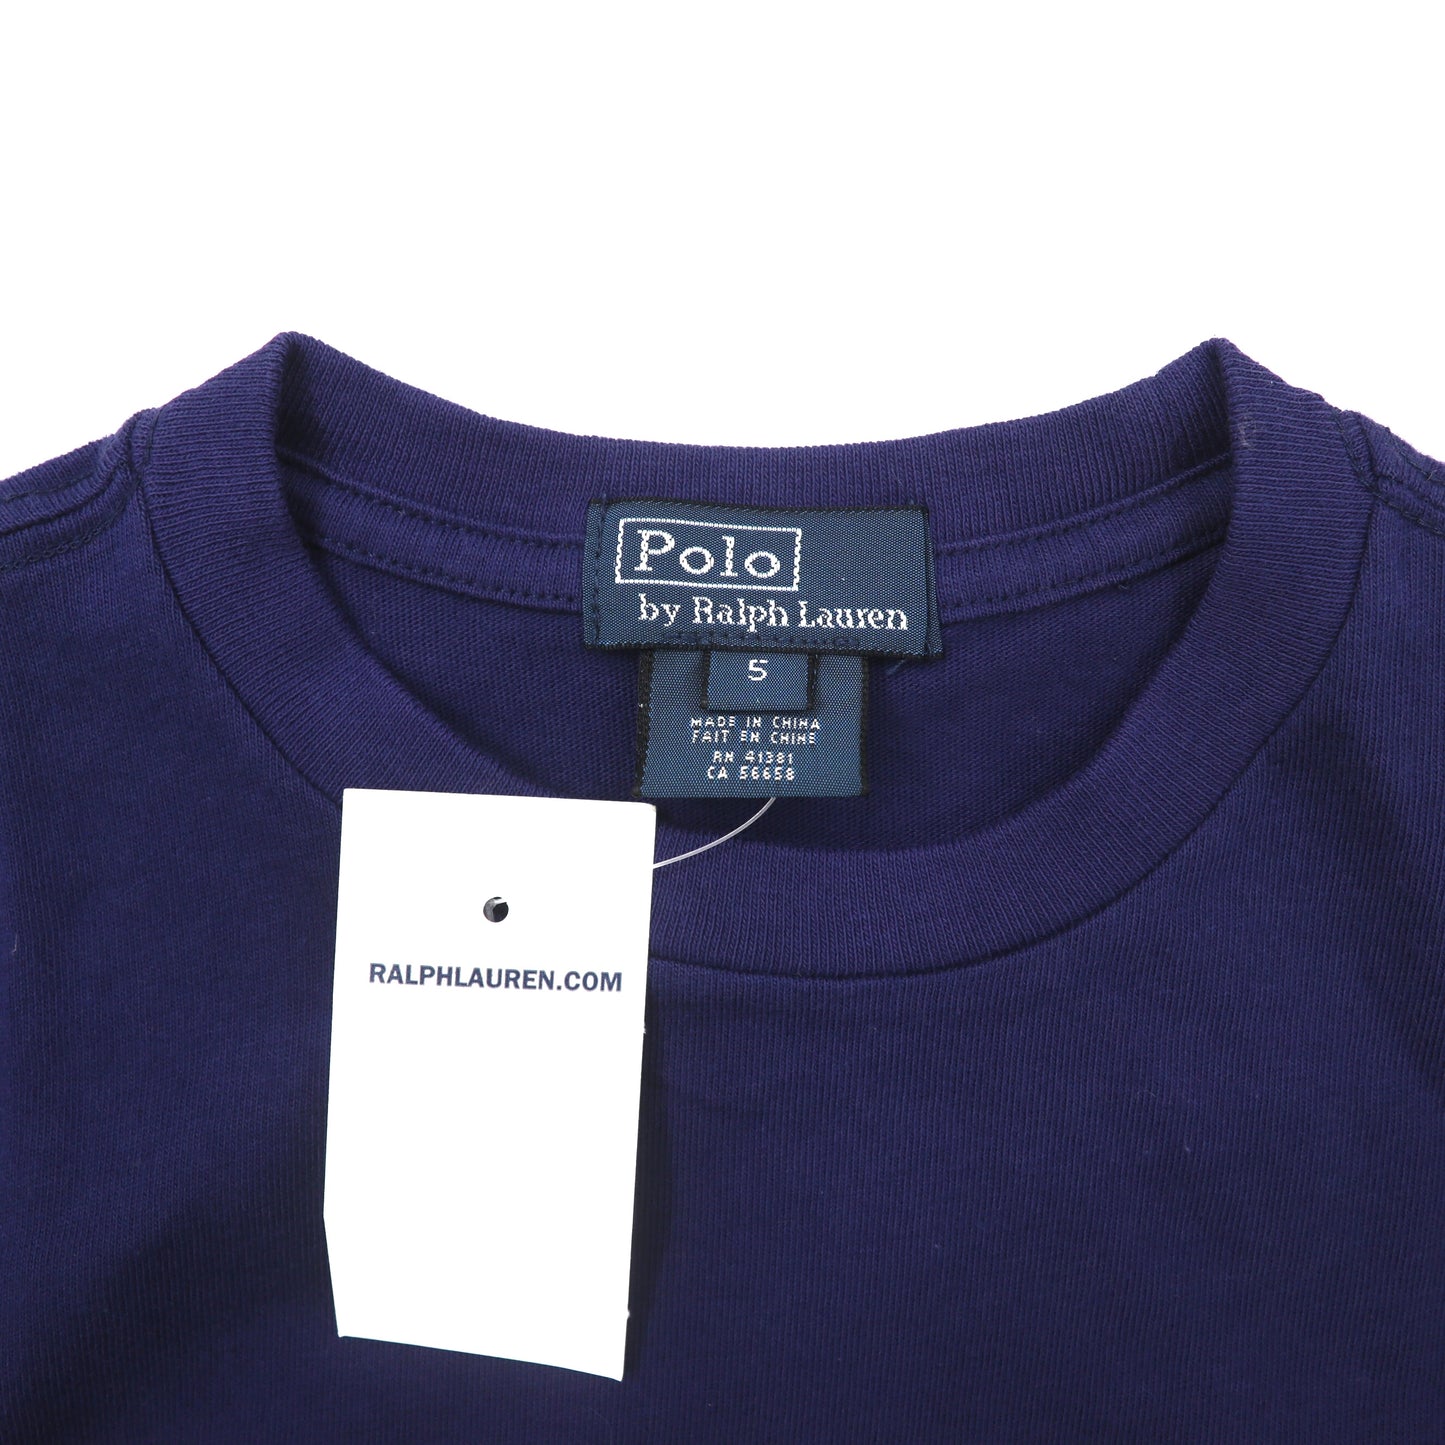 Polo by Ralph Lauren ロゴプリントTシャツ 5 ネイビー コットン ビッグポニー 未使用品